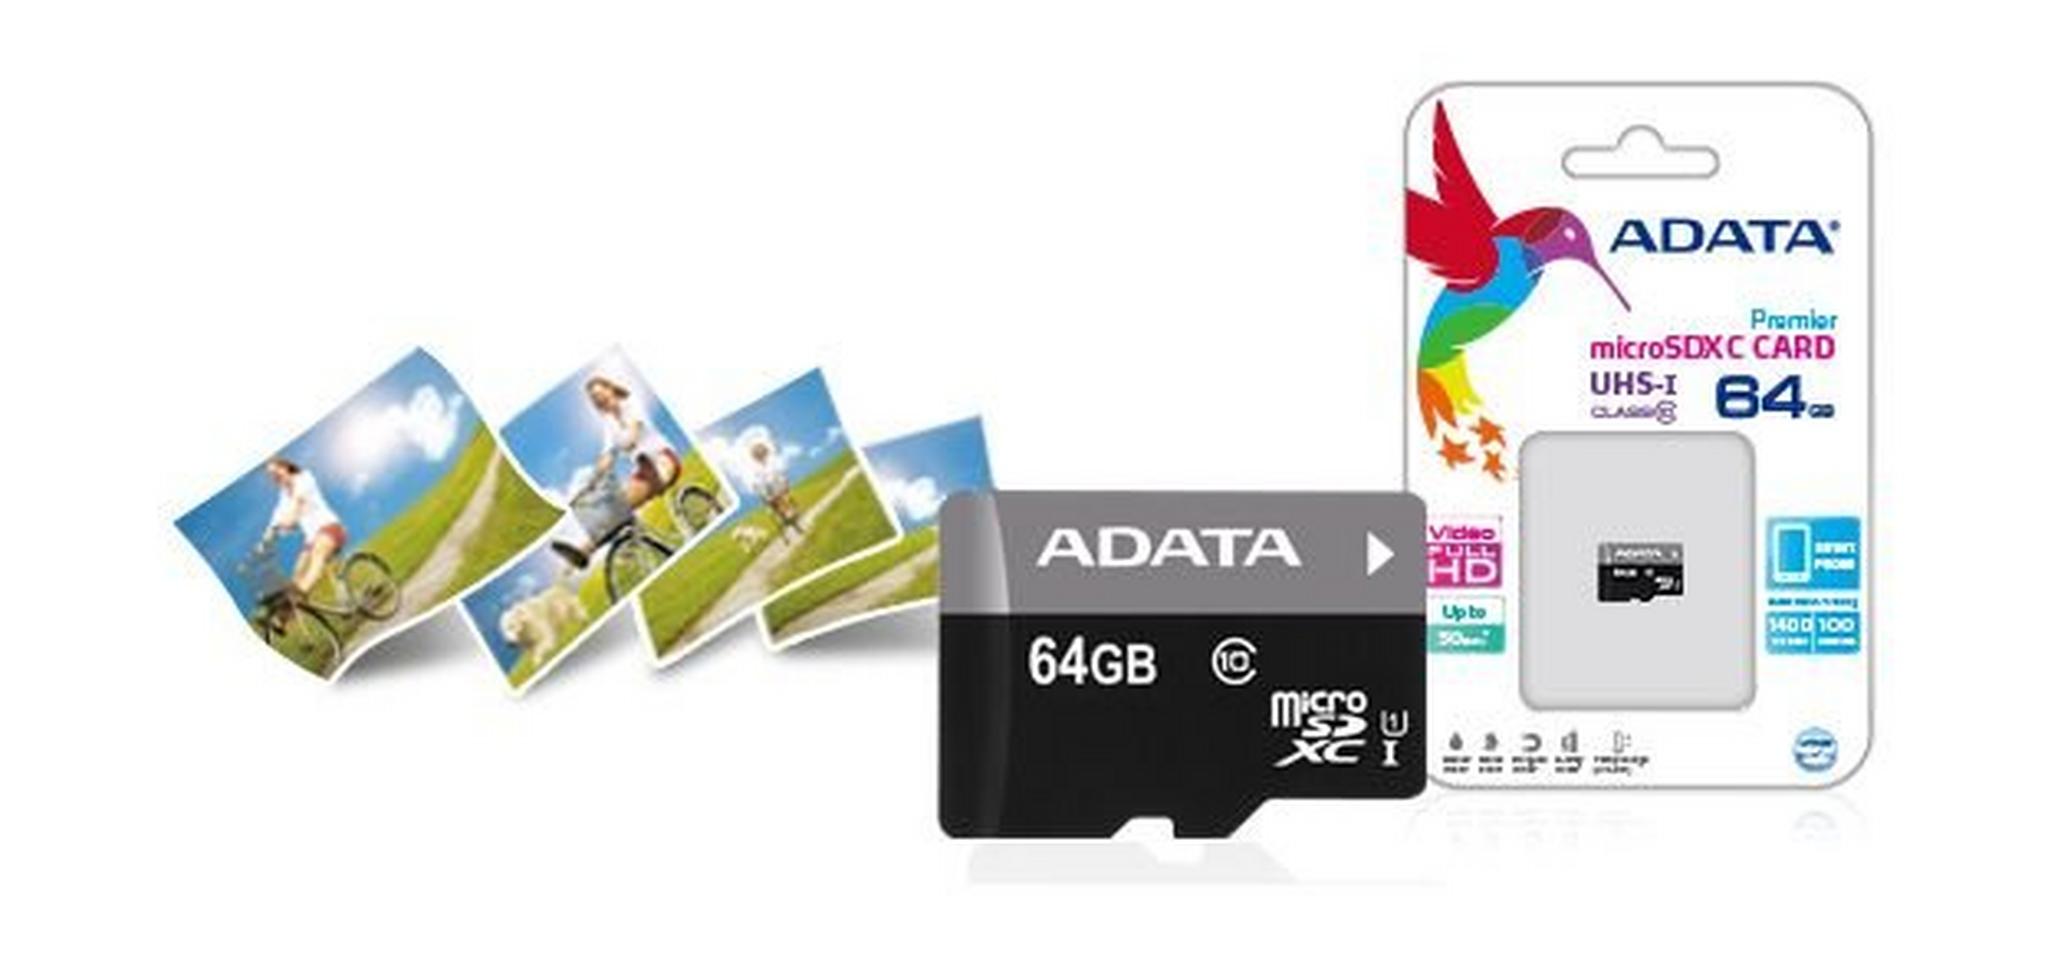 Adata 128GB UHSI MicroSD Memory Card - GUICL1085